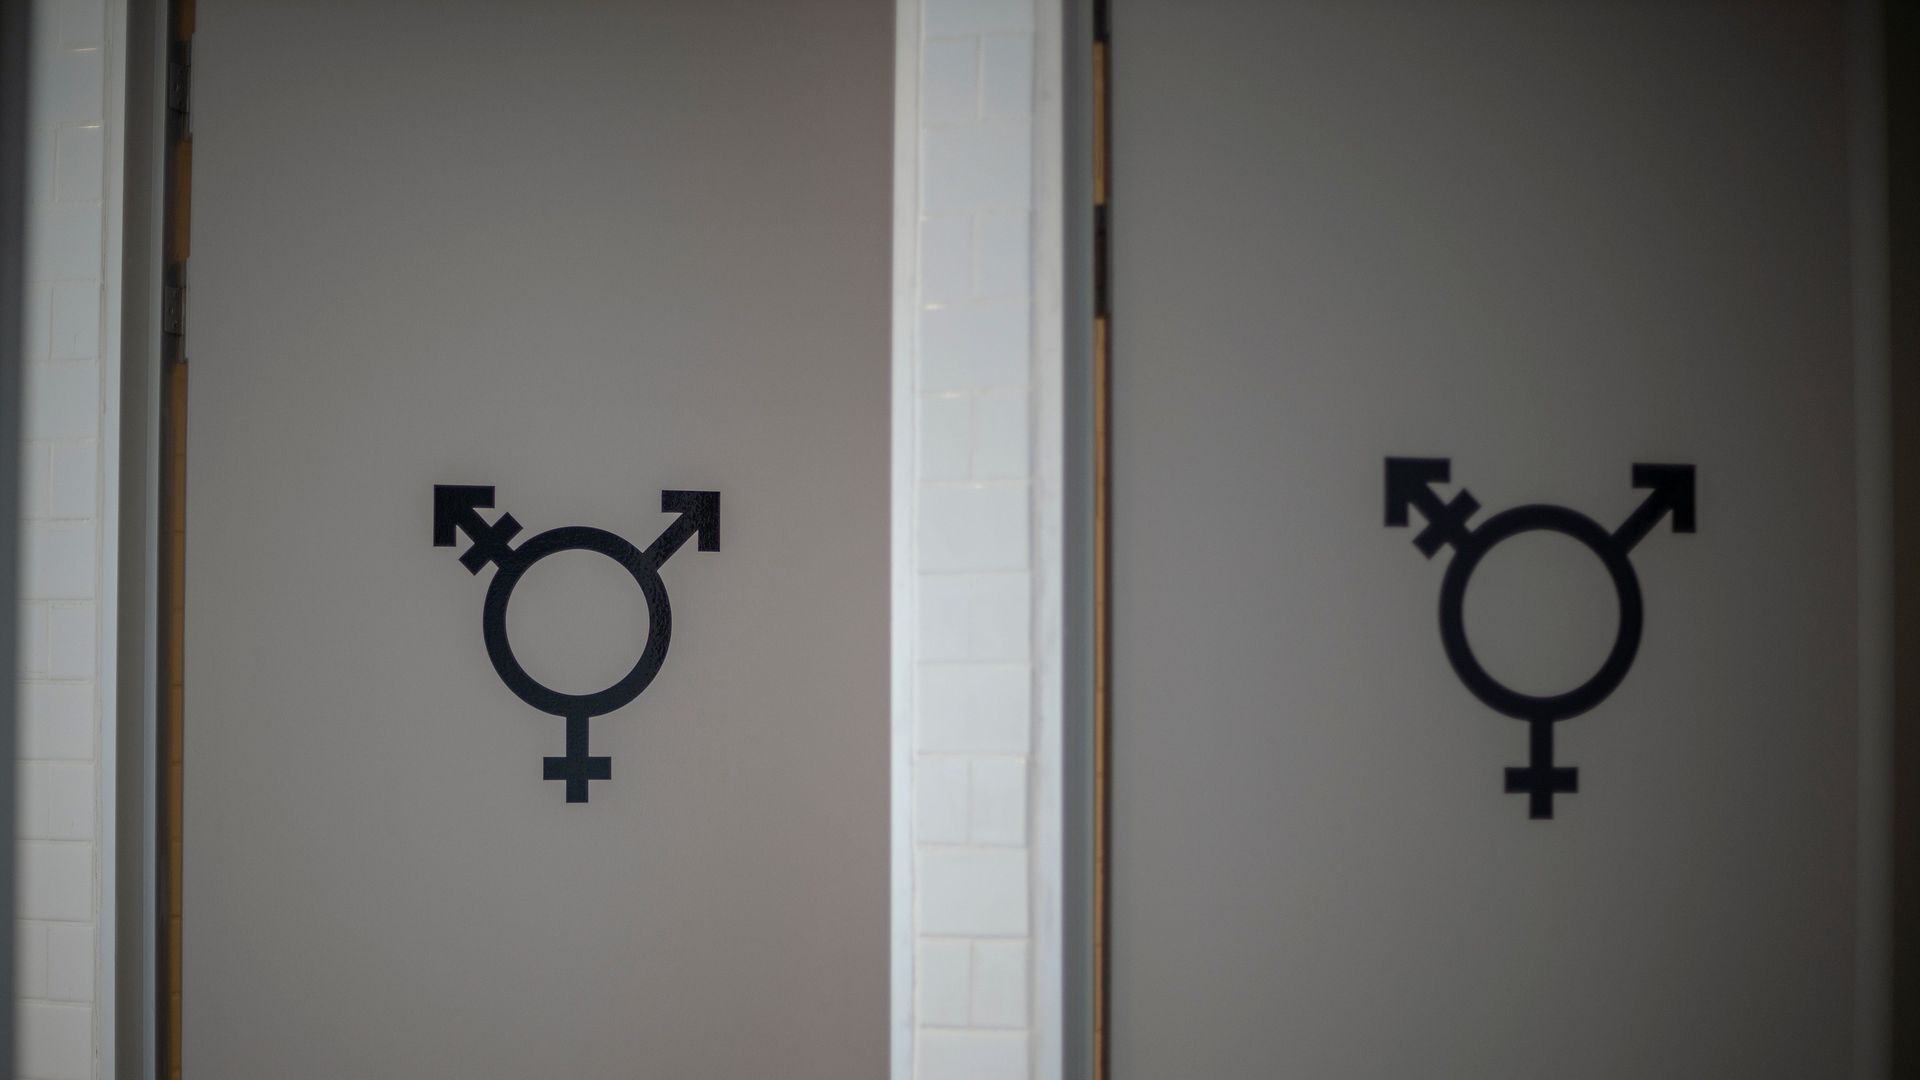 A sign designates a gender neutral restroom